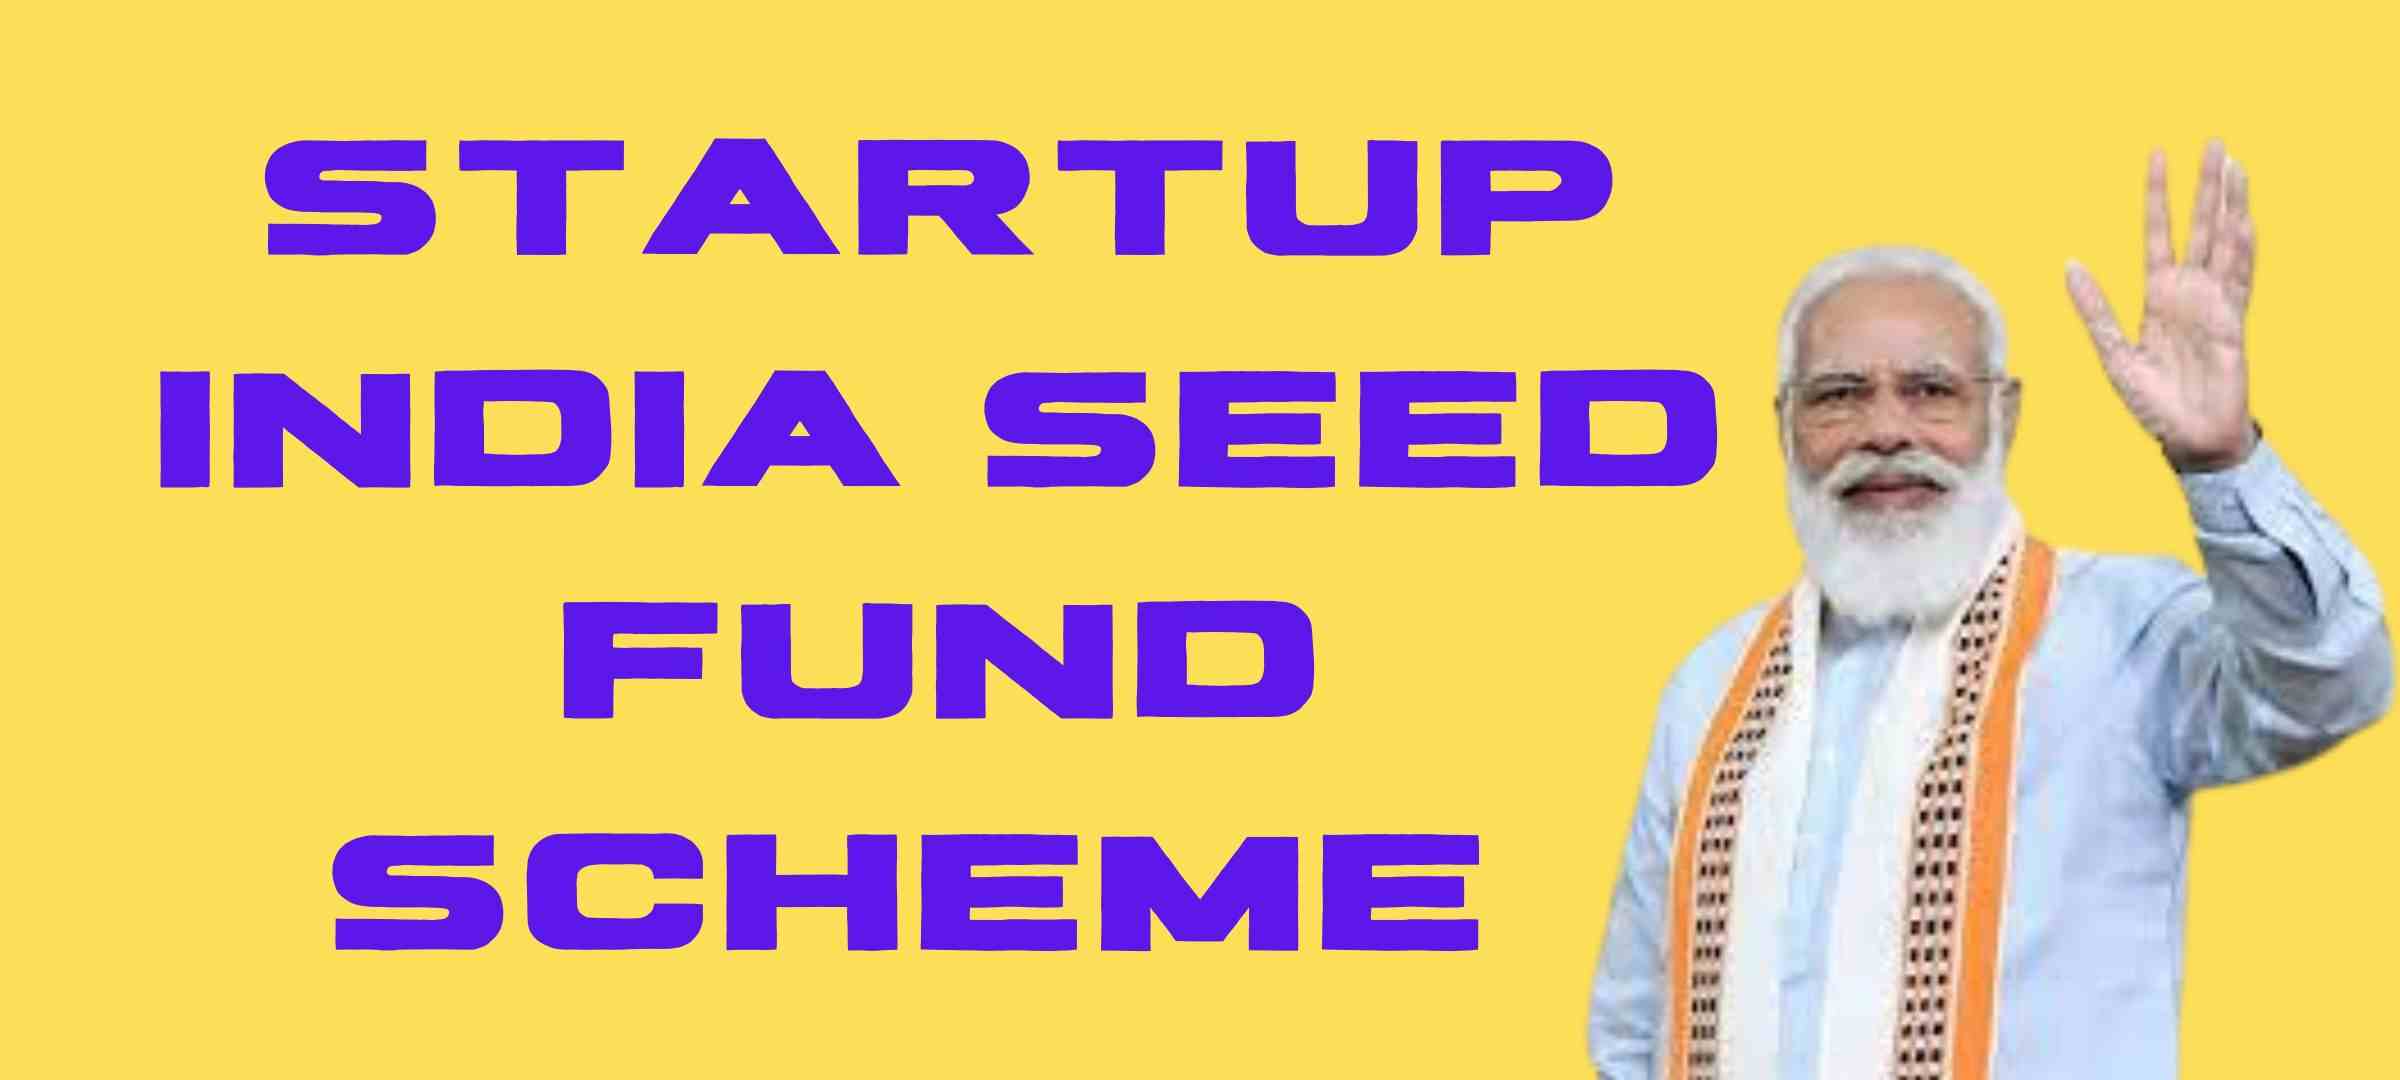 Startup India Seed Fund Scheme Lauch date | Startup India seed fund scheme guidelines amount logo upsc